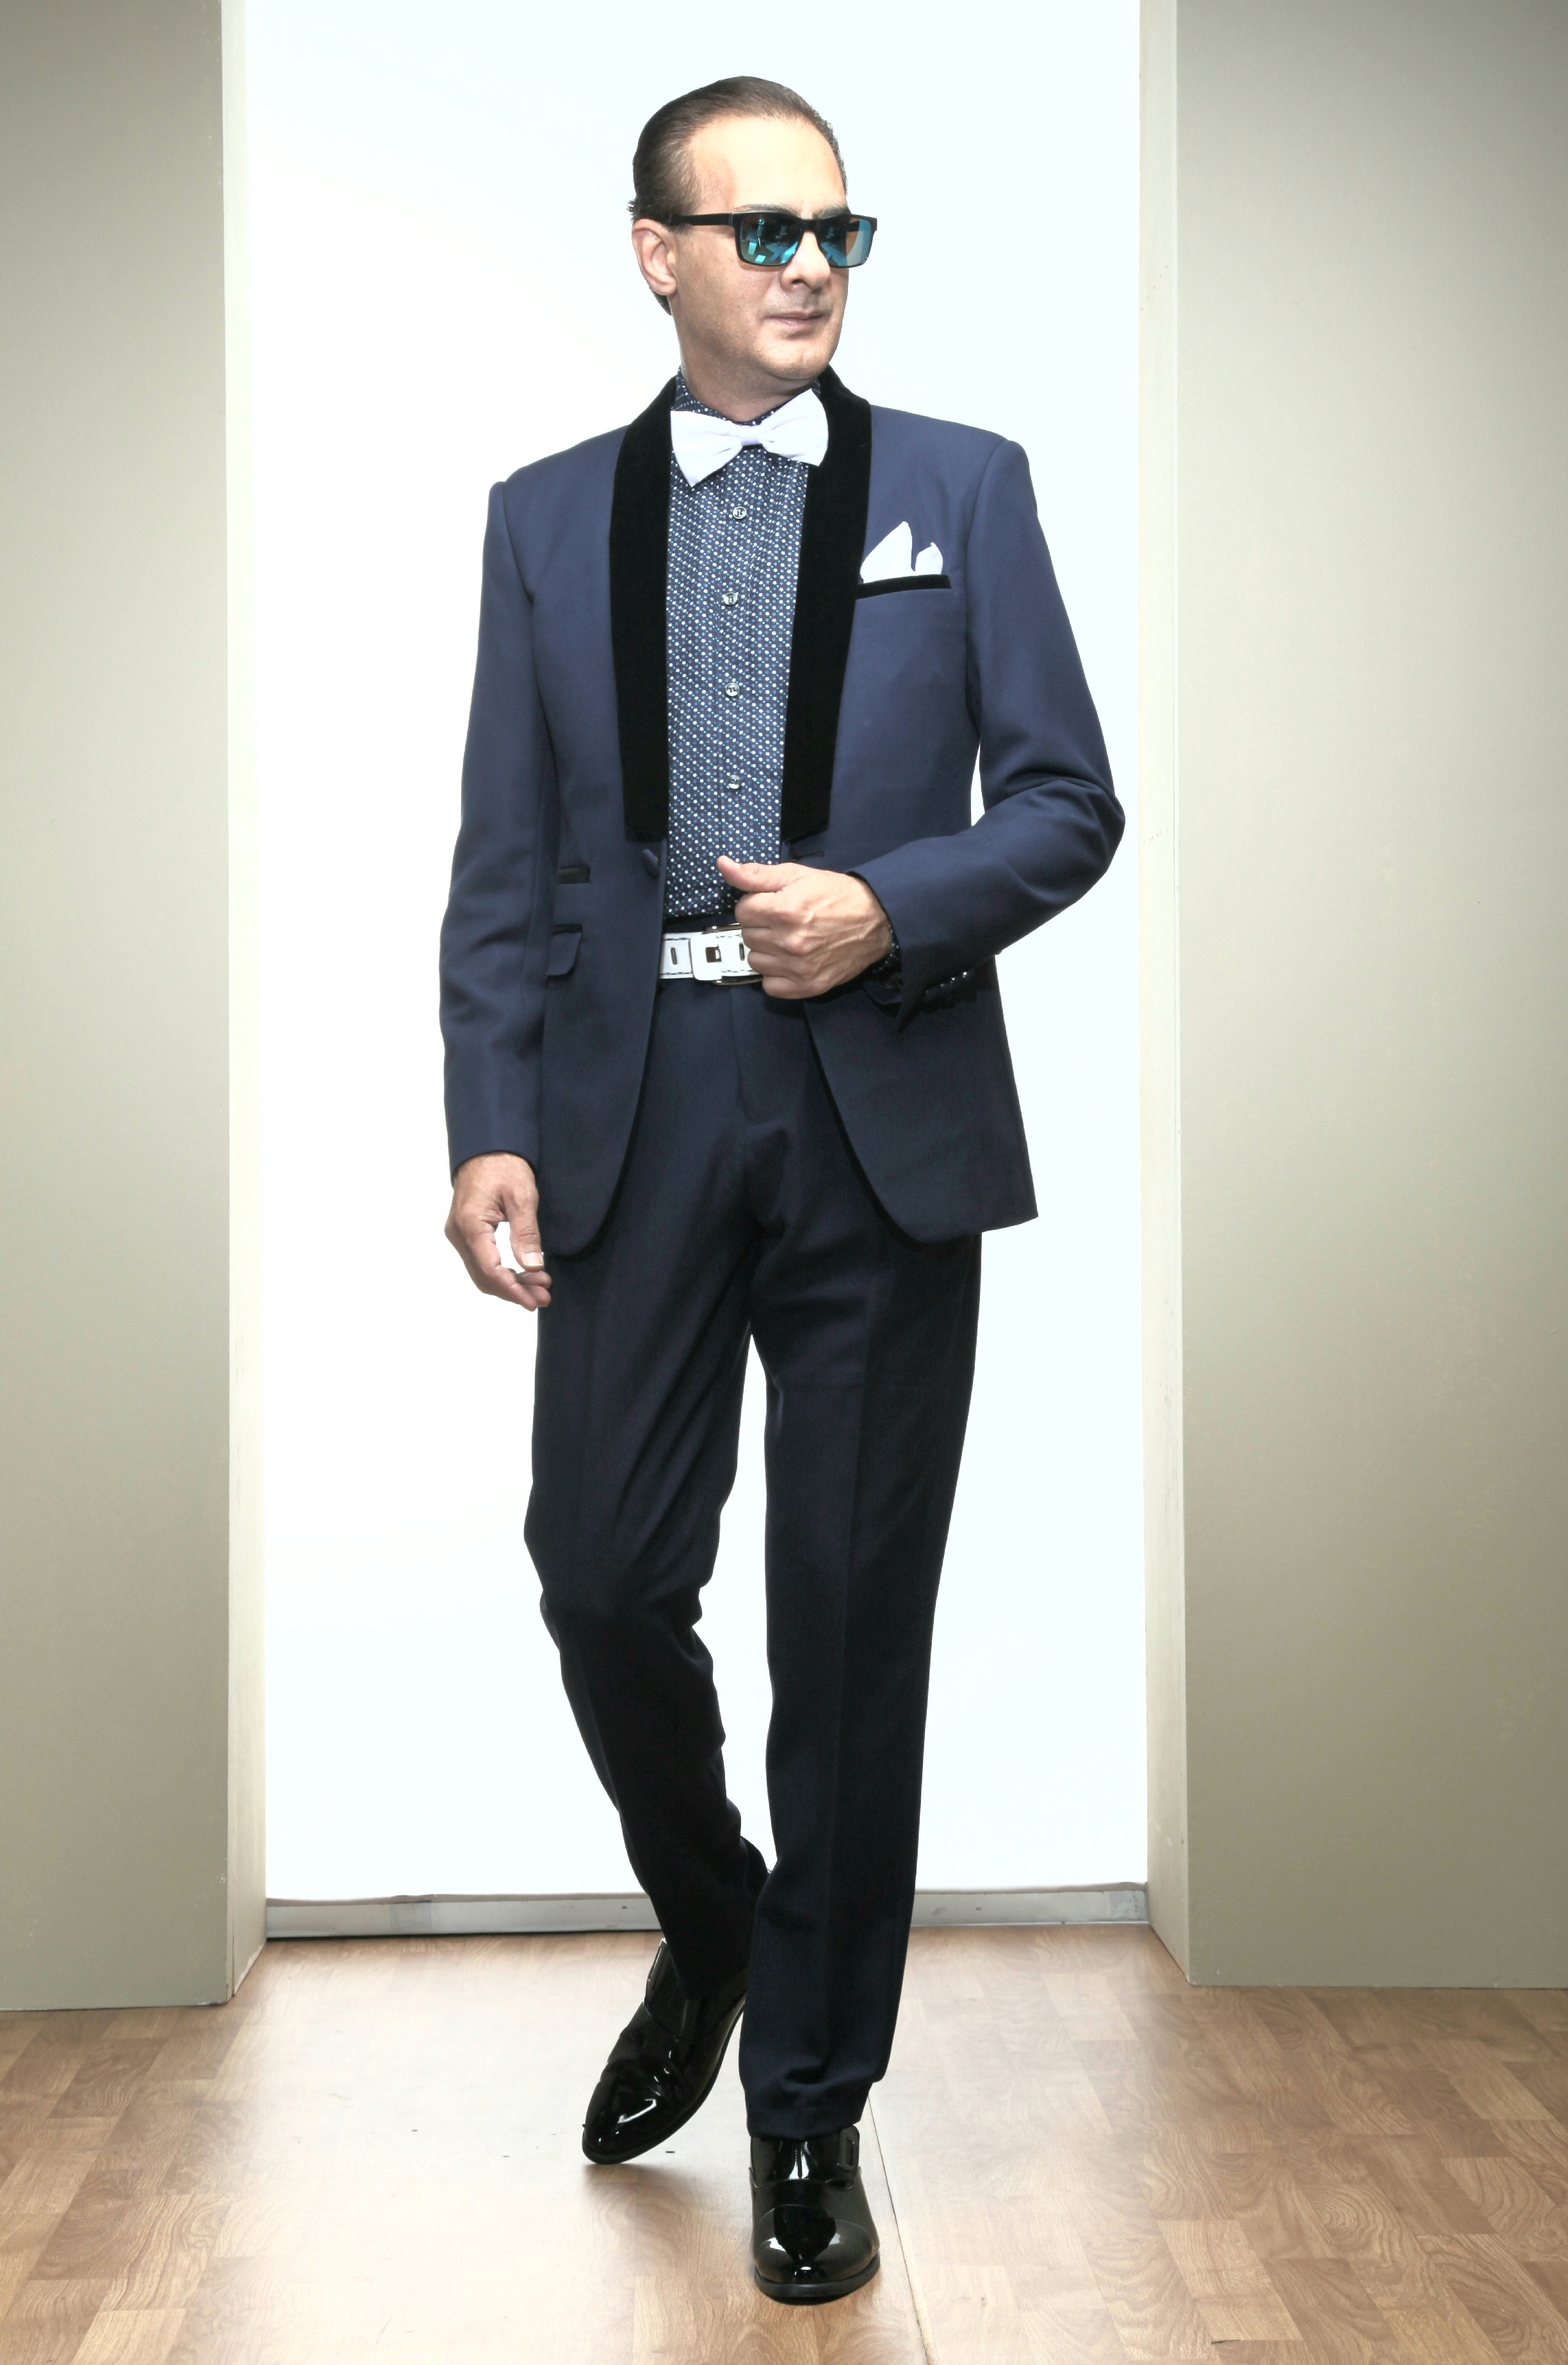 Suit Rental Suits Rent Hire Designer My Singapore Tailor Tailors Rentals Shop Tuxedo Black Tie Wedding Formal 68